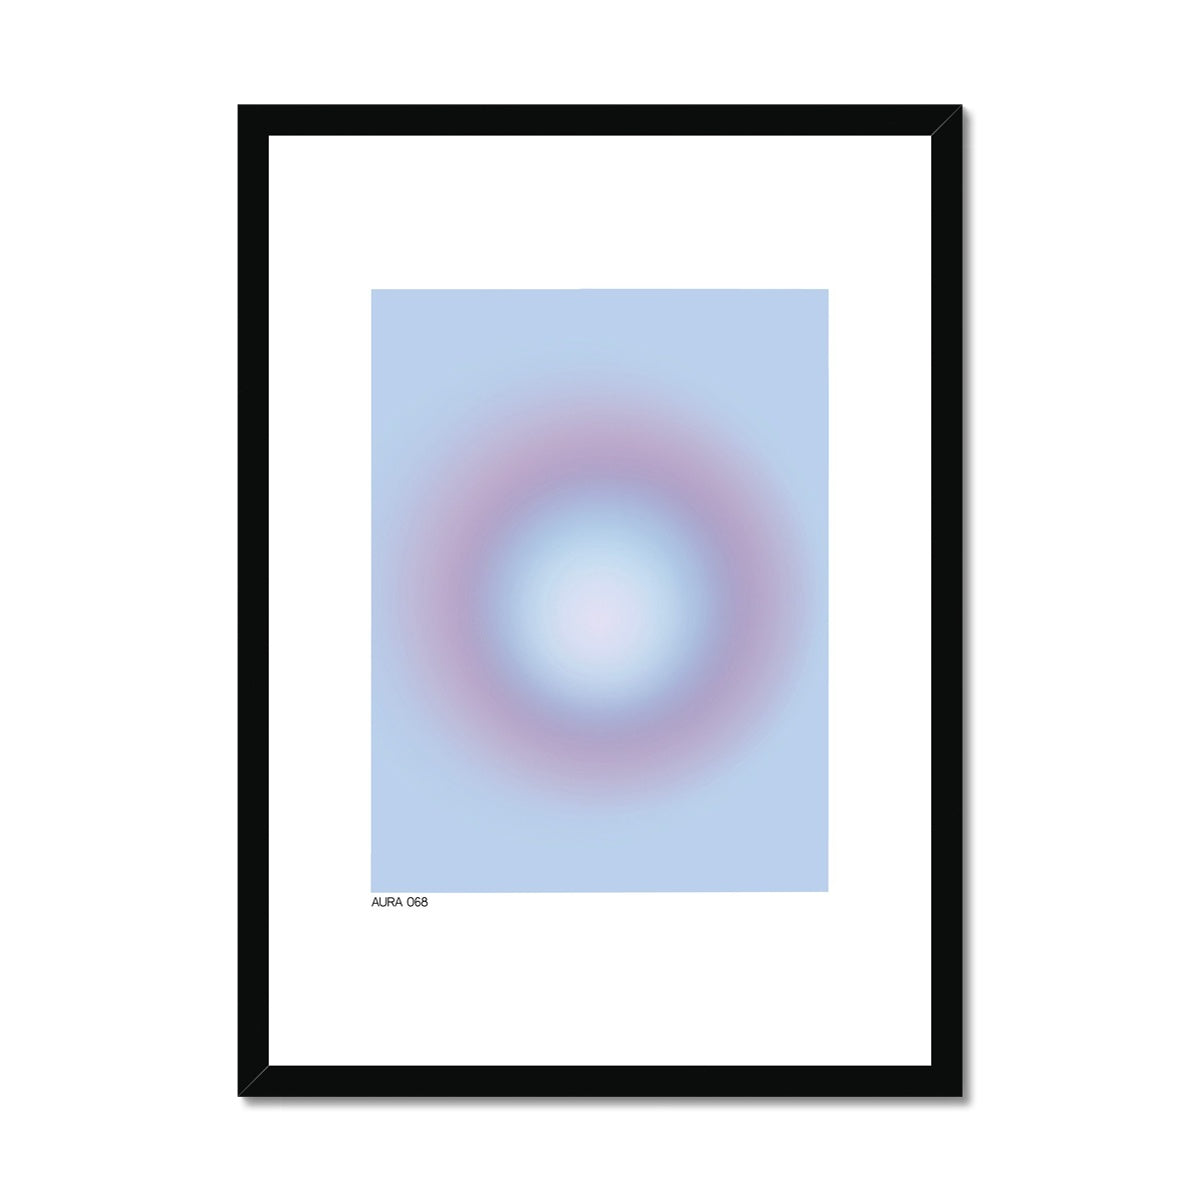 aura 068 Framed & Mounted Print